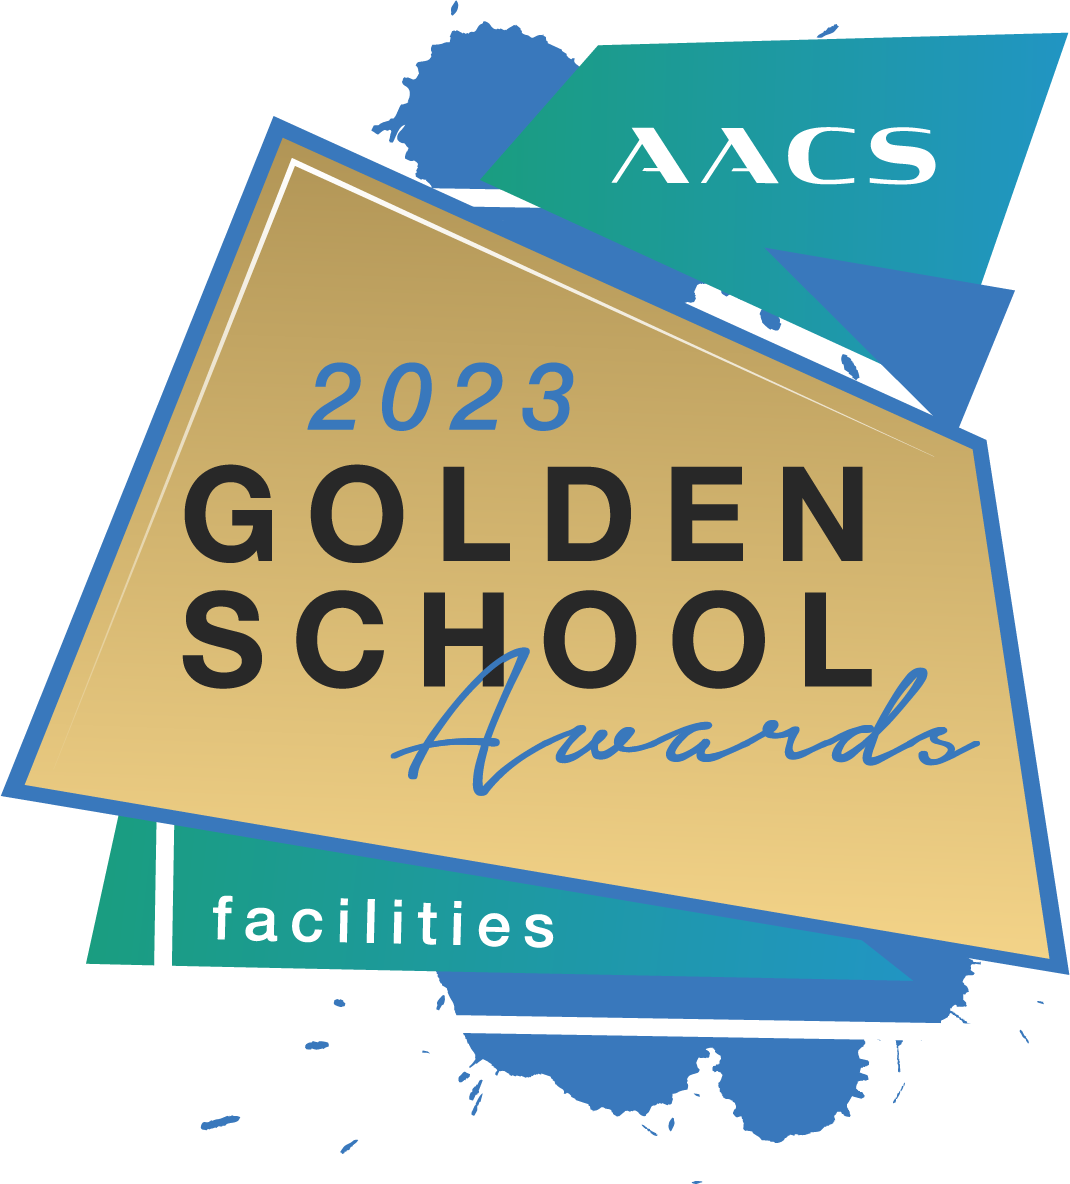 2023 AACS Golden School Award School of the Year